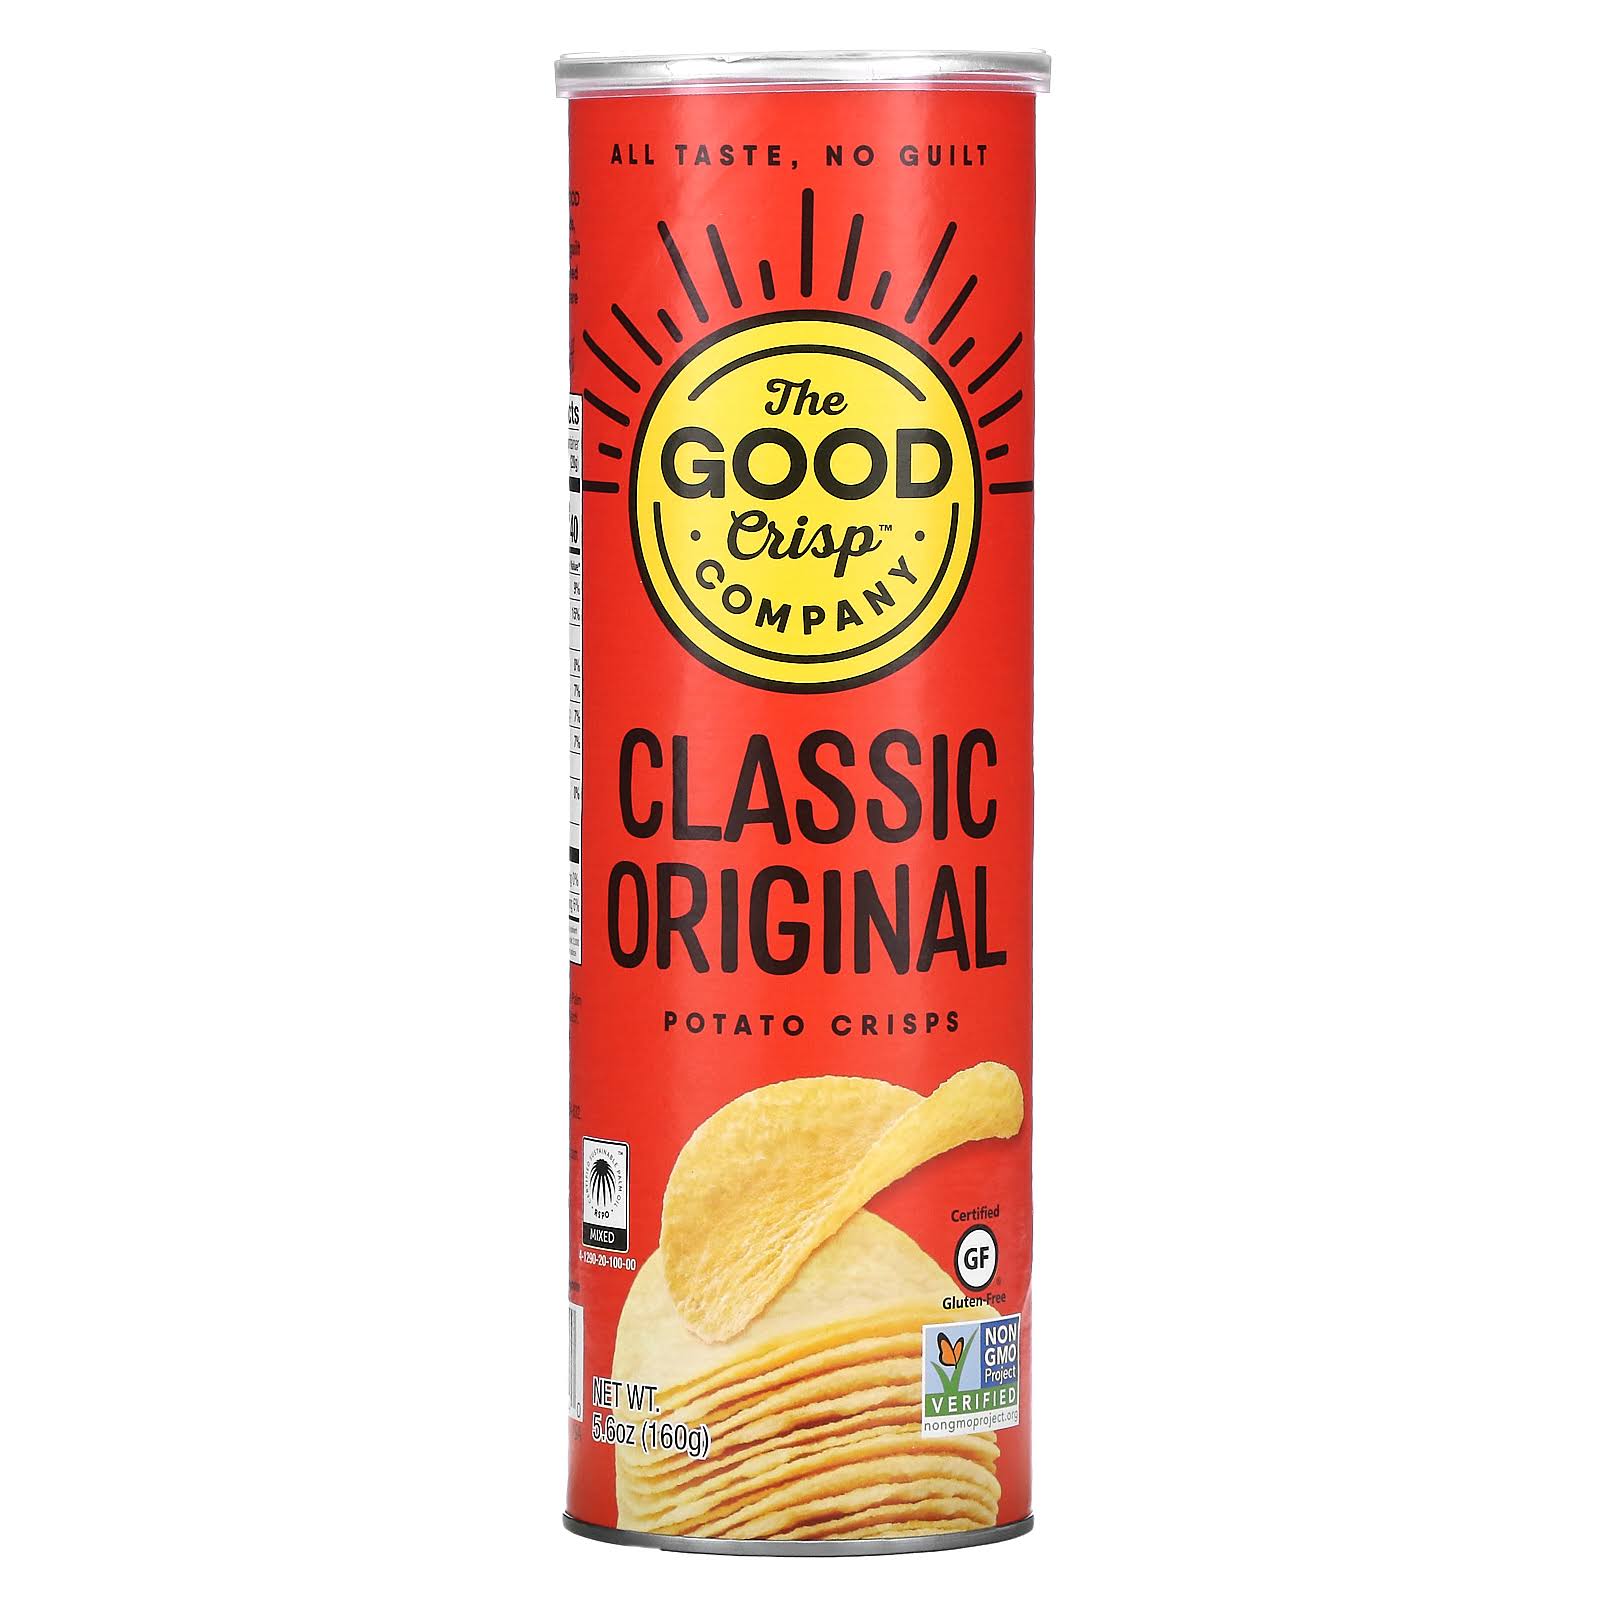 The Good Crisp Company Potato Crisps, Classic Original - 5.6 oz